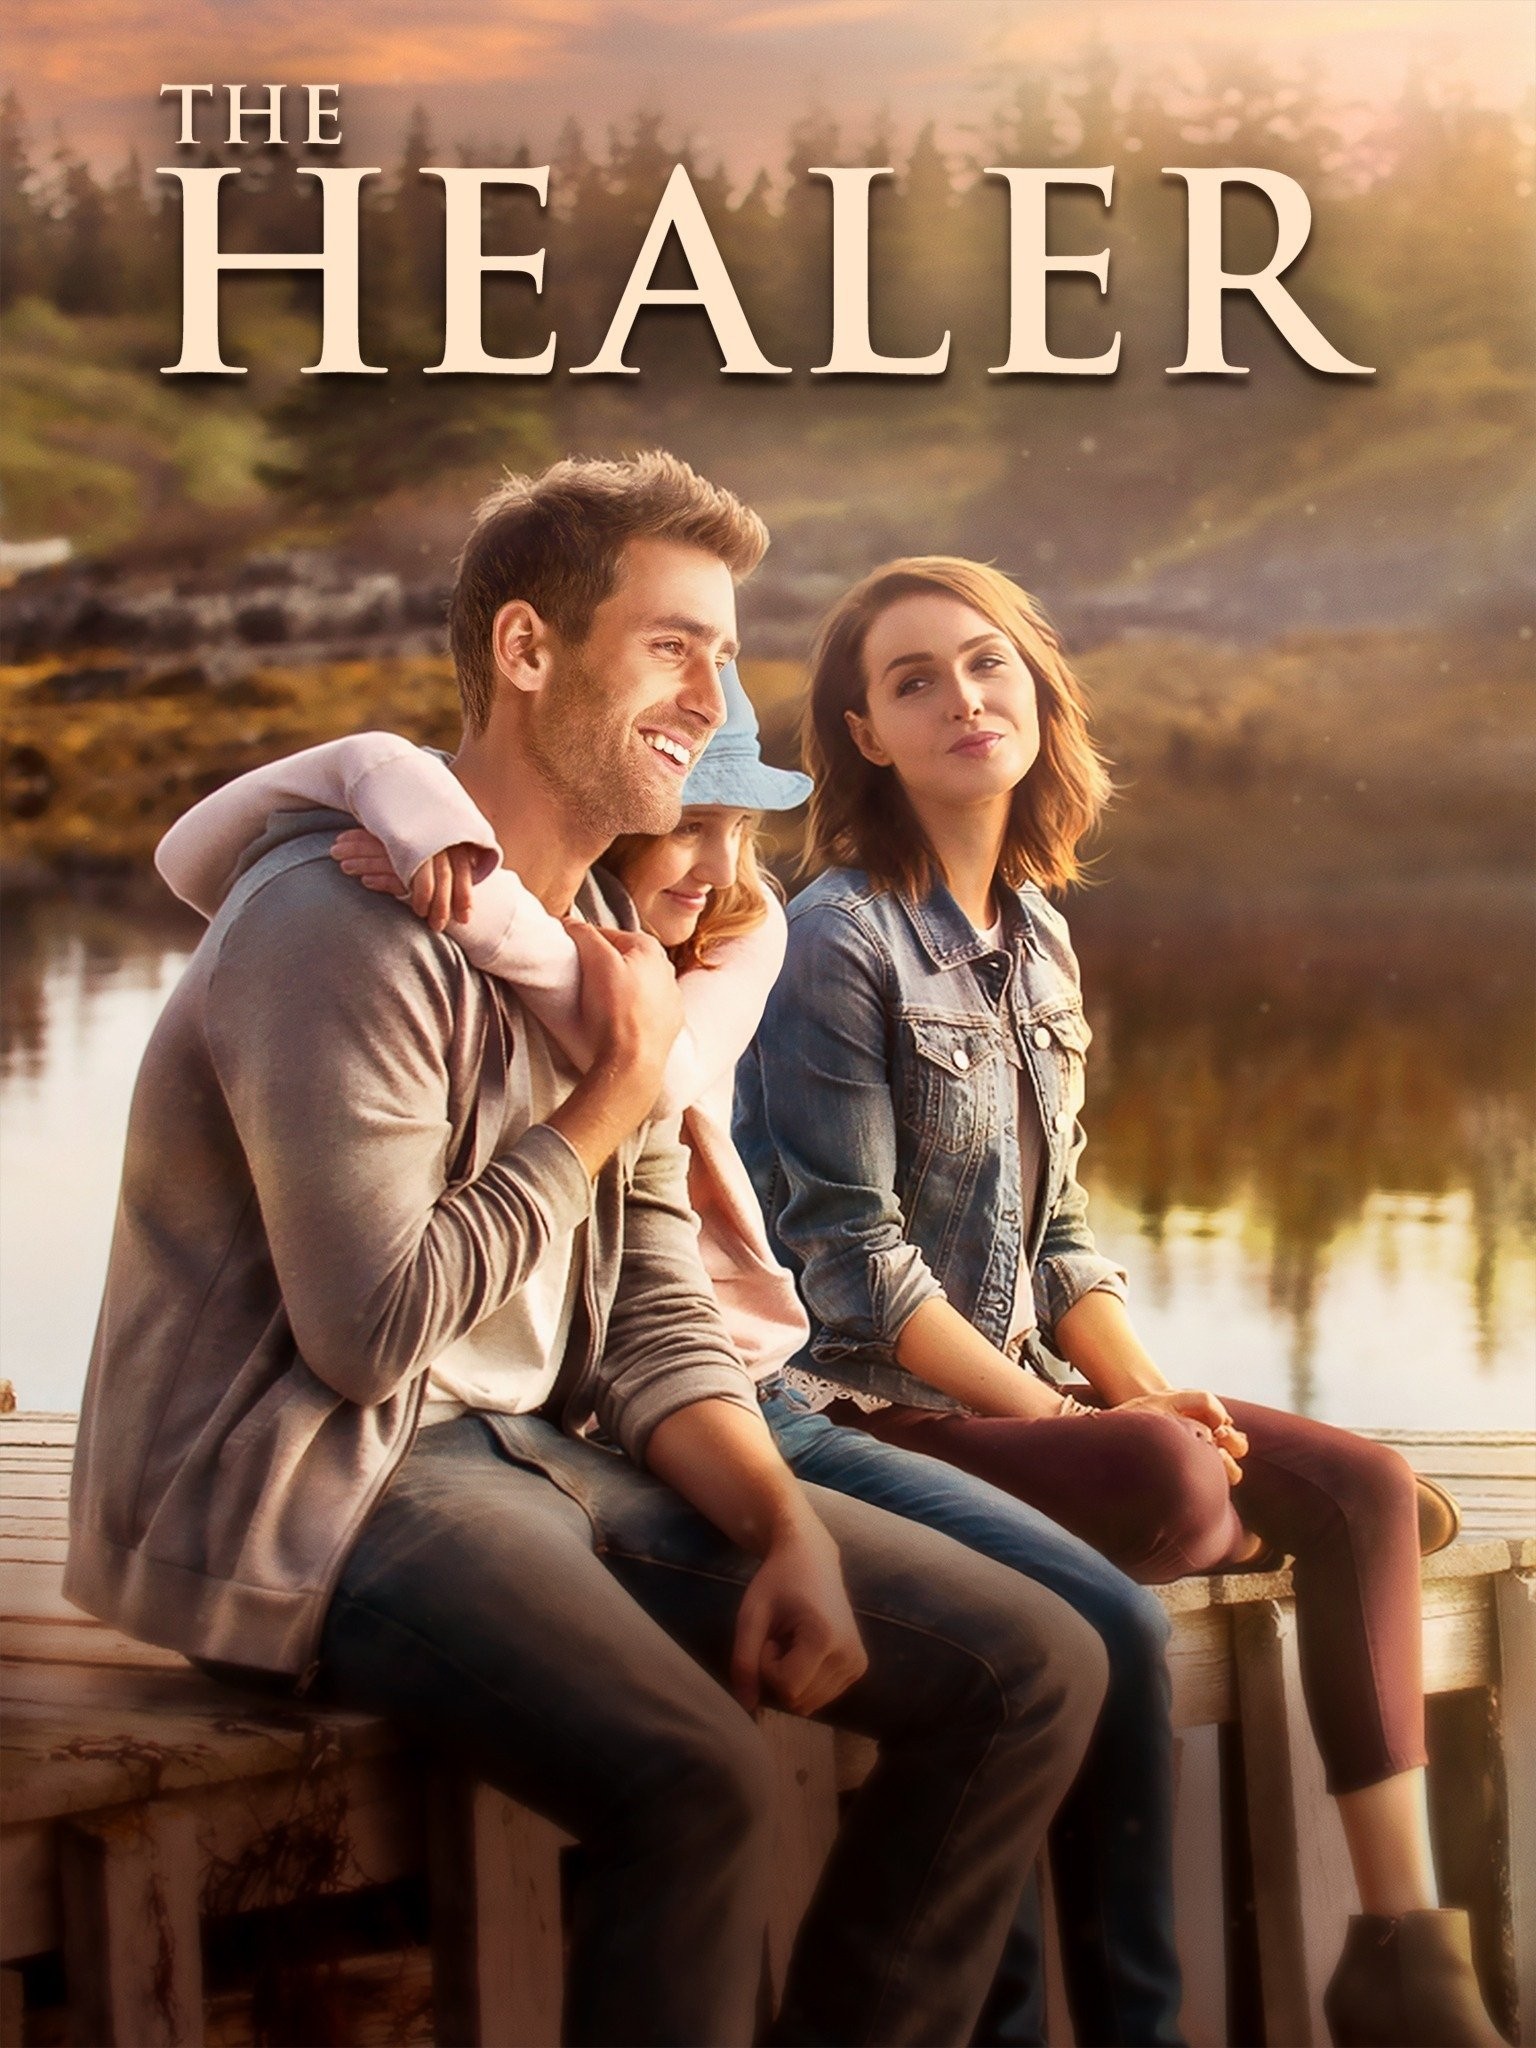 TV Time - Redo of Healer (TVShow Time)